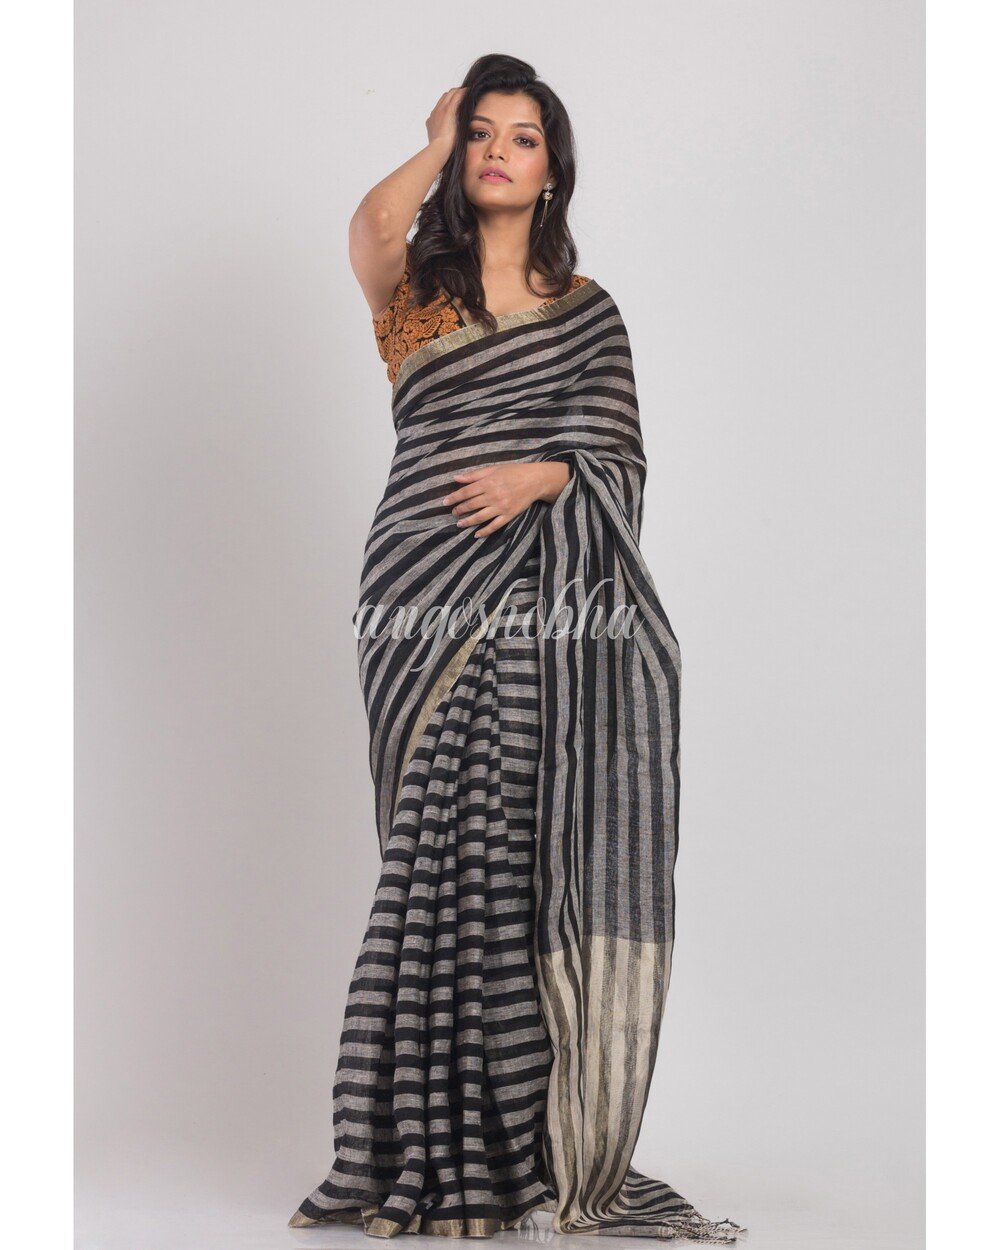 Women's Grey Handwoven Linen Saree - Angoshobha